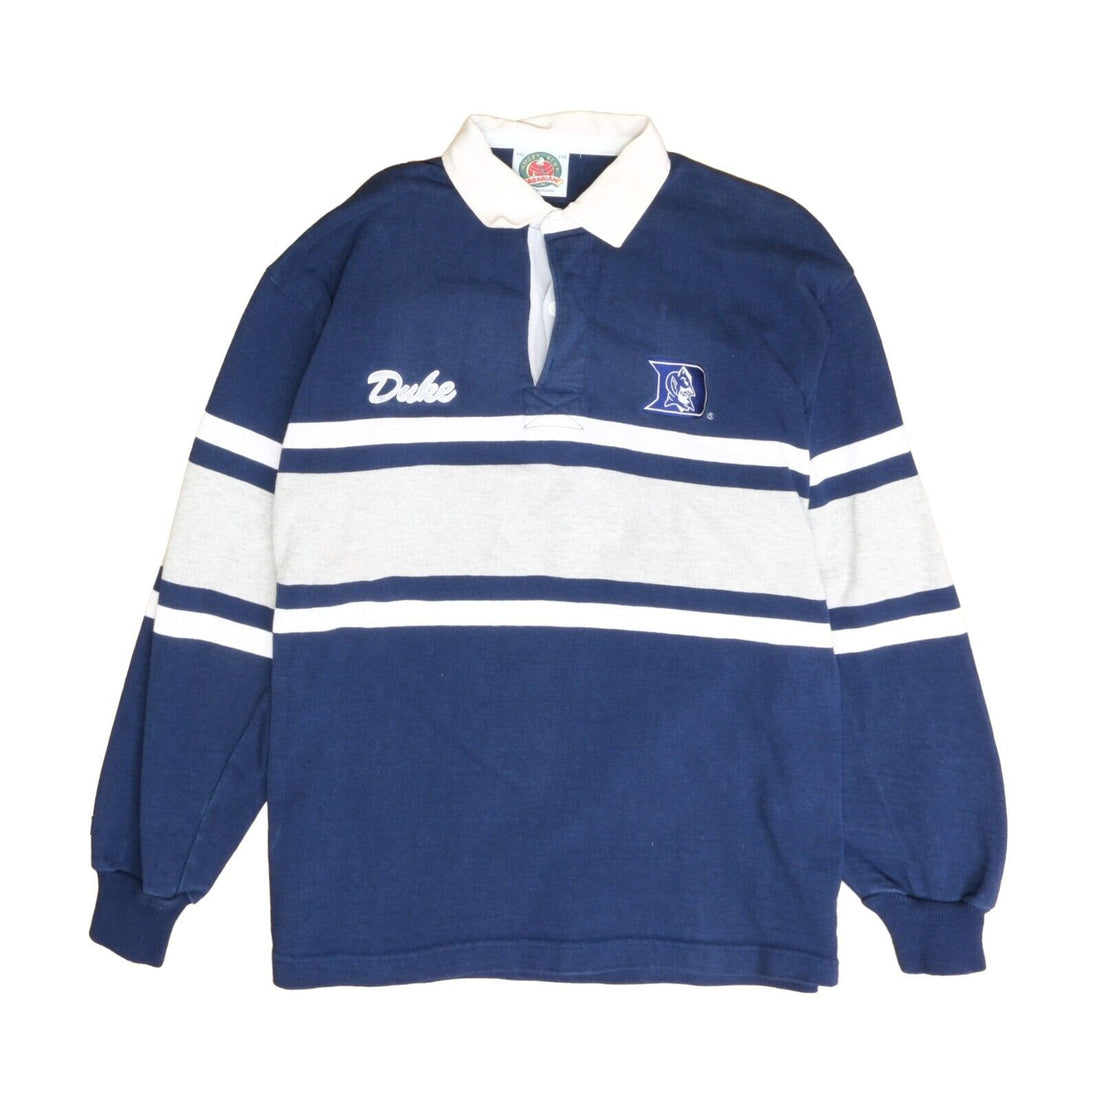 Vintage Duke Blue Devils Barbarian Rugby Shirt Size 2XL Blue Long Sleeve NCAA